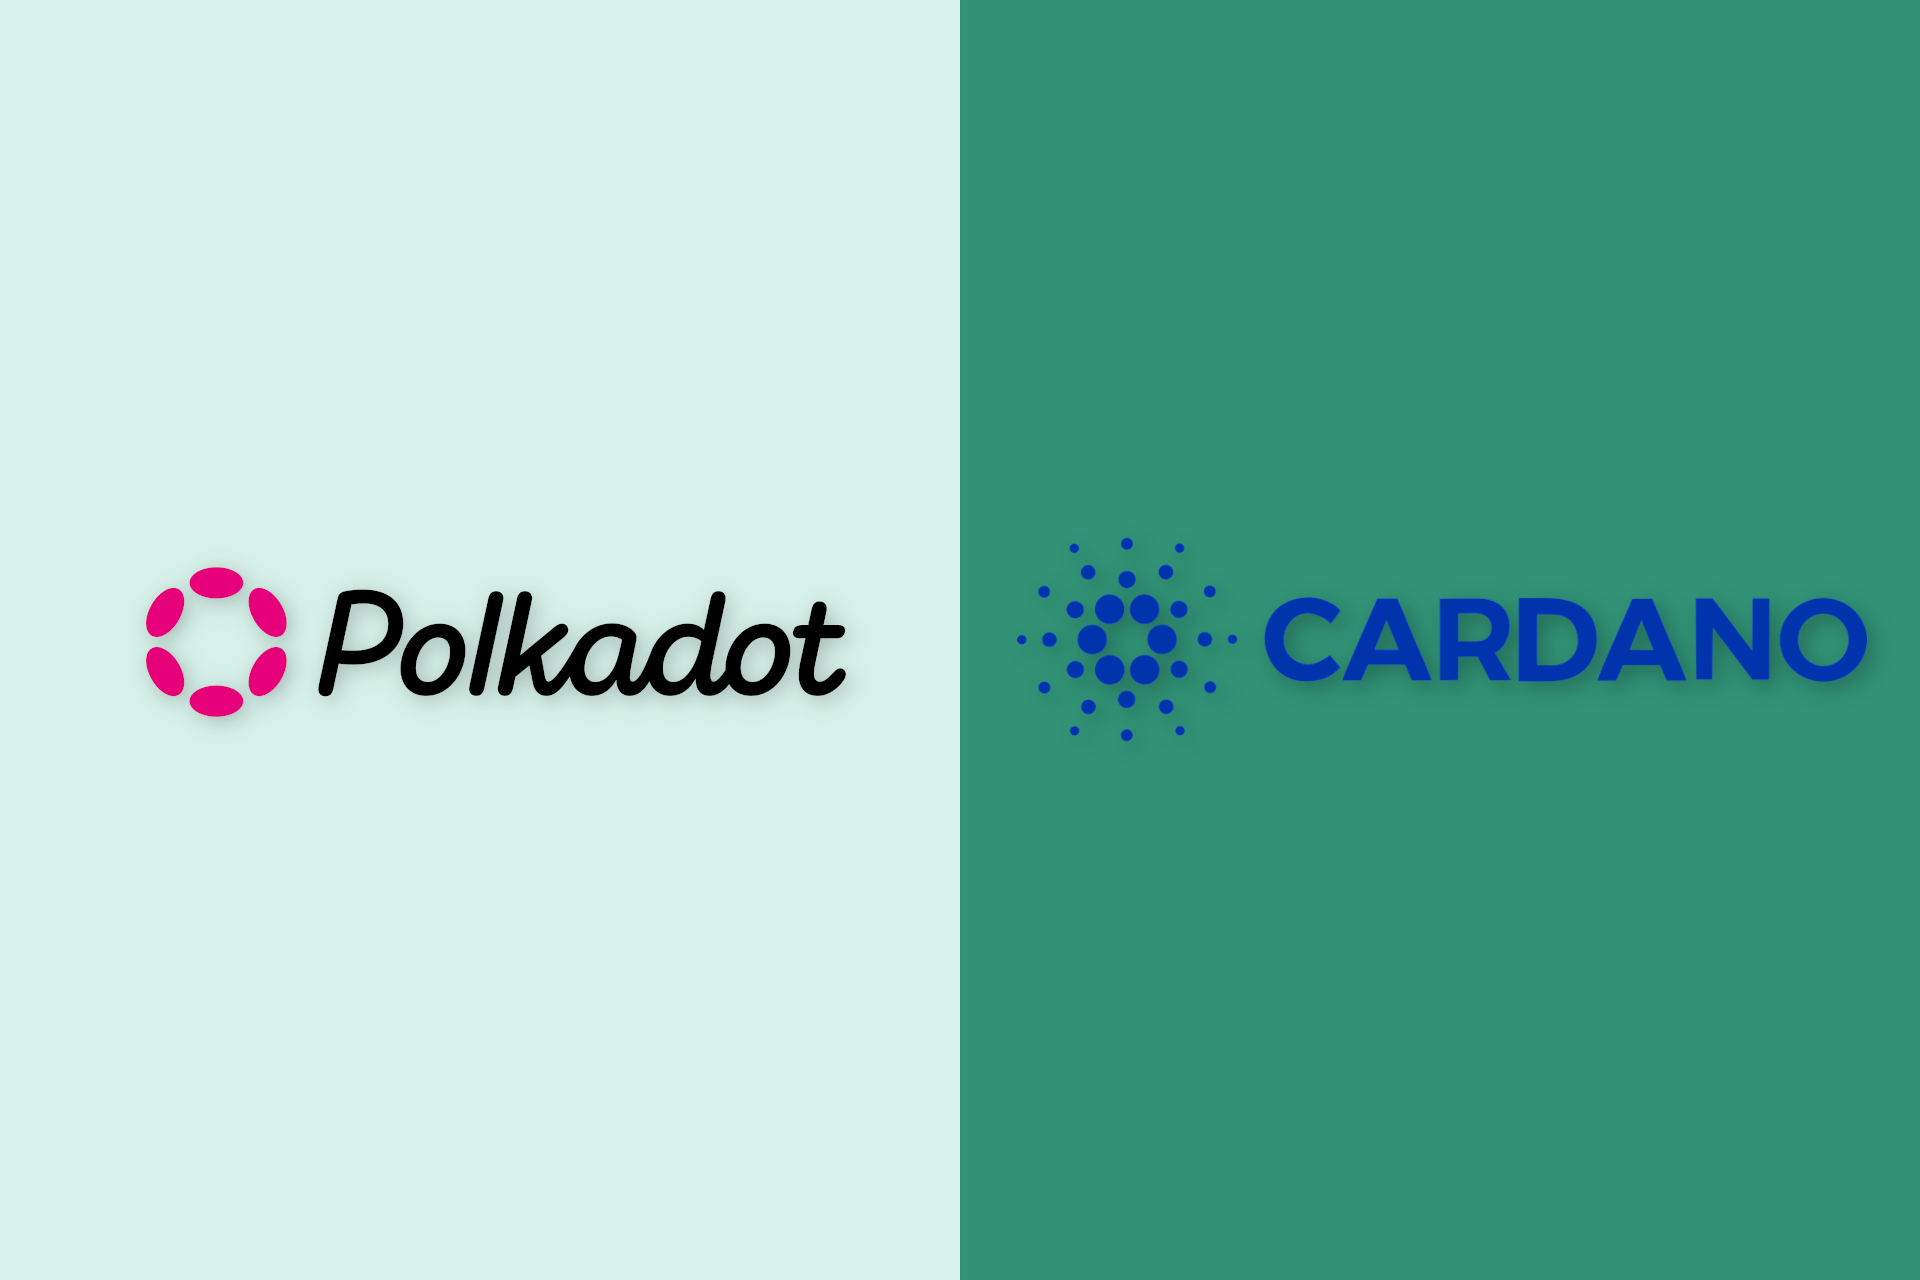 Comparing Polkadot and Cardano eocsystems